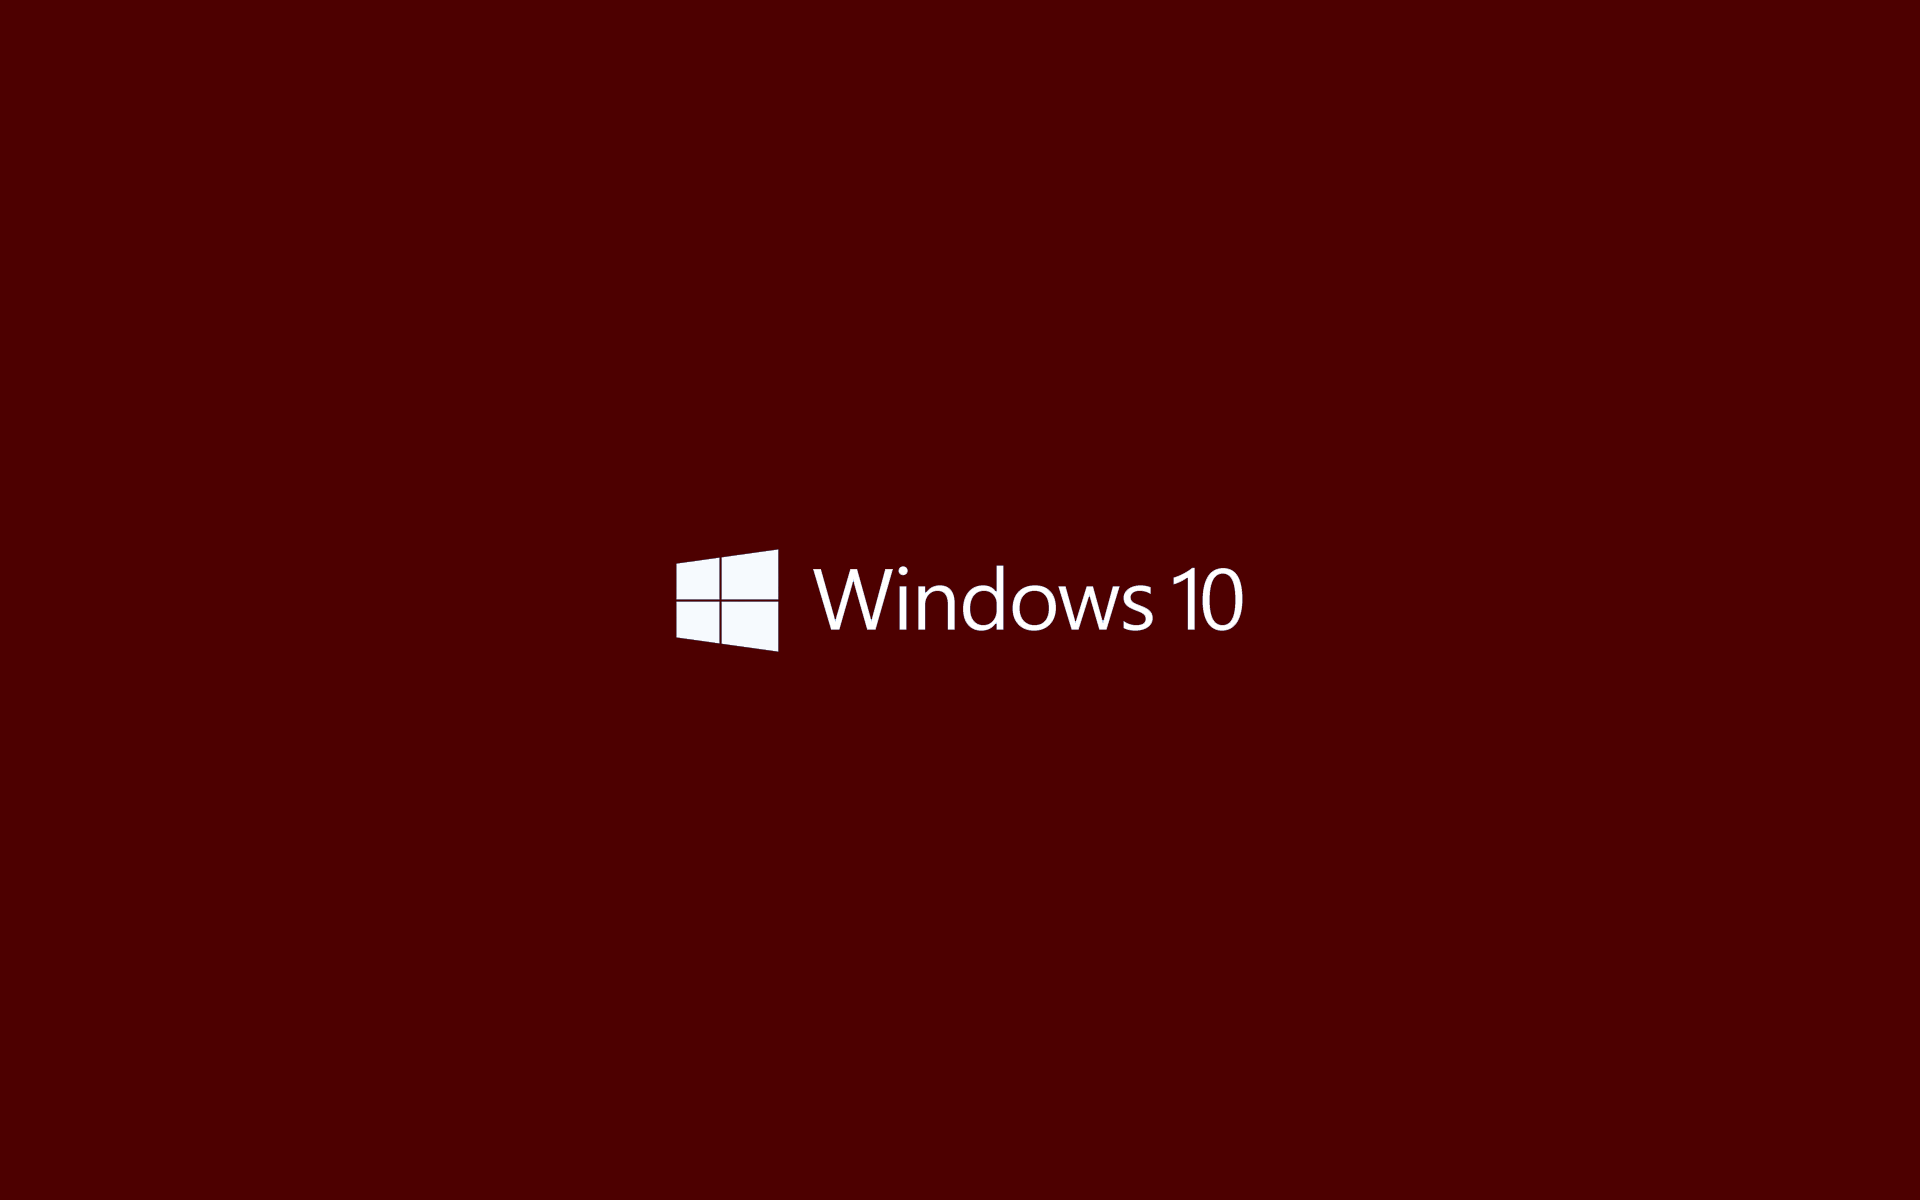 Windows 10 Original 1 Hd Computer 4k Wallpapers Images